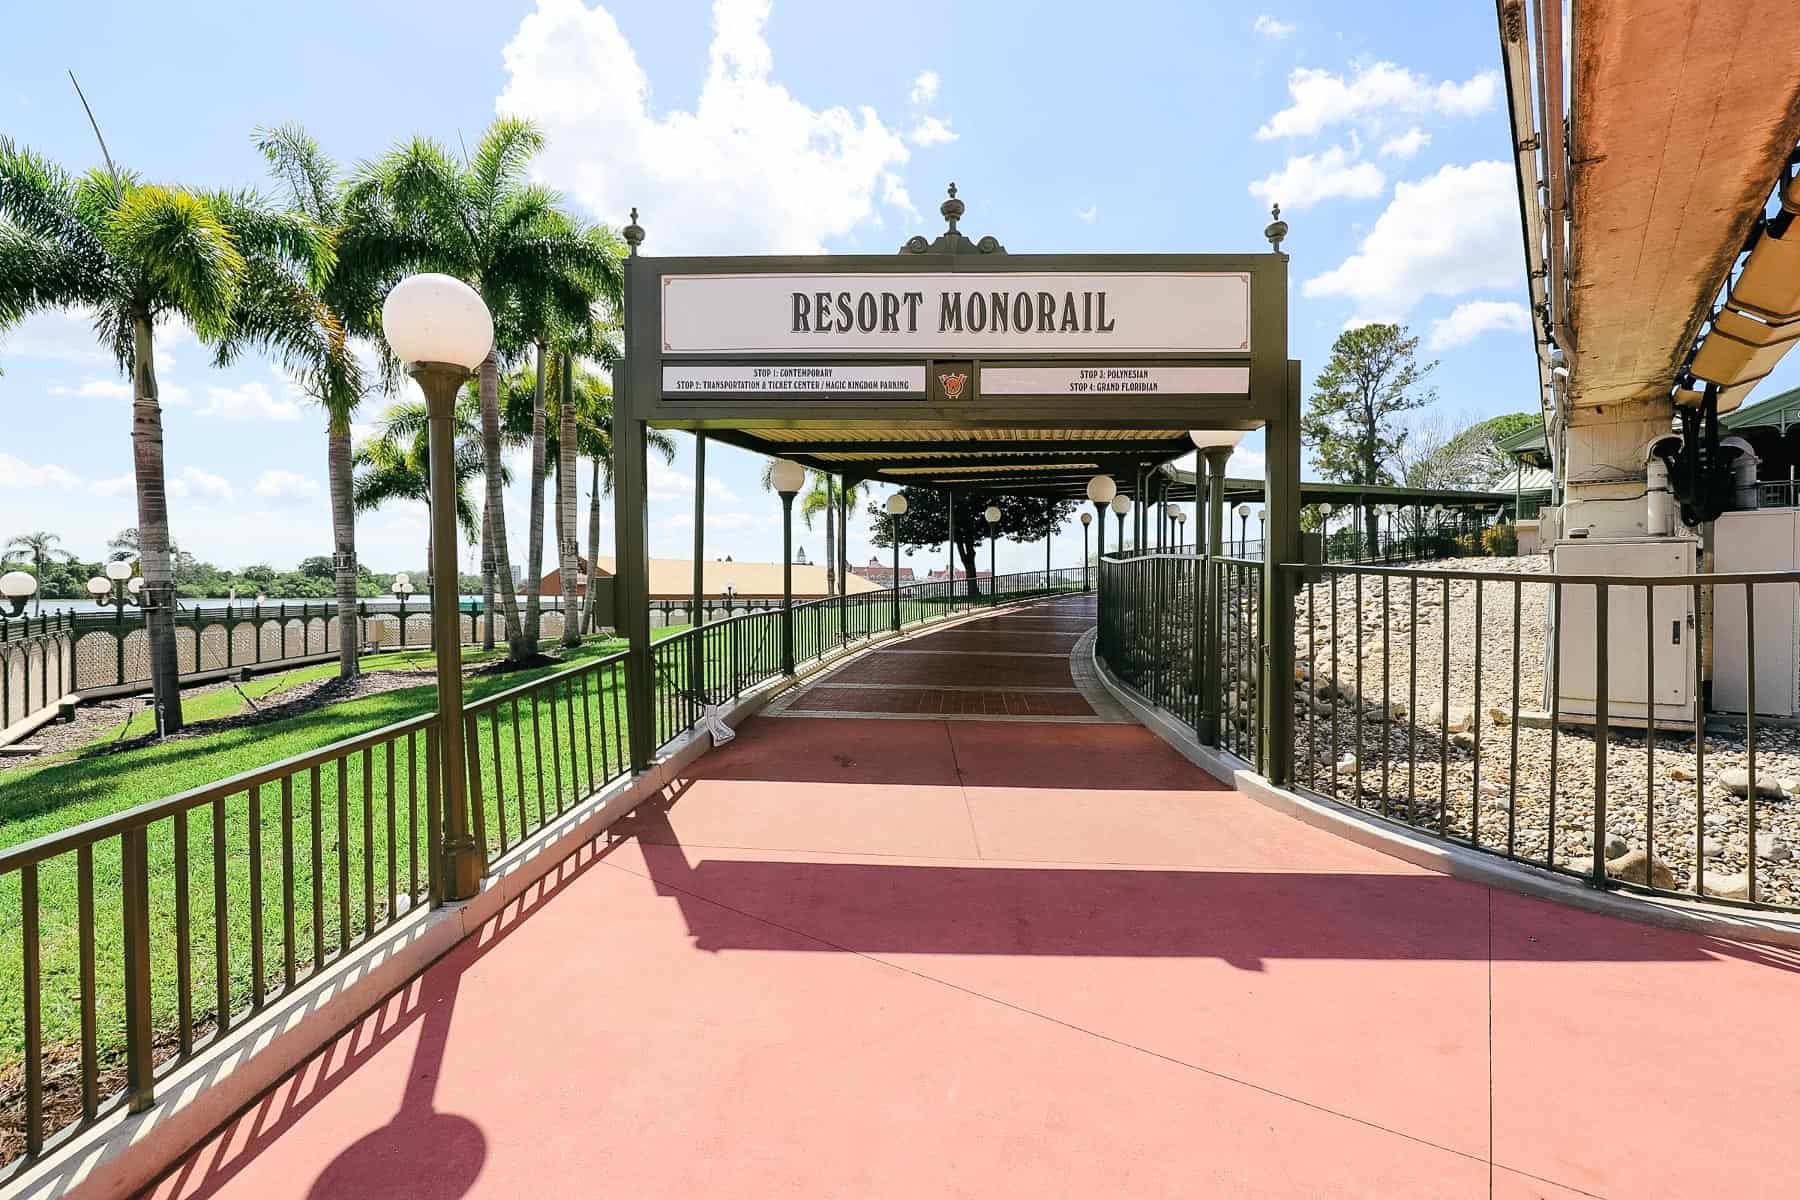 the resort monorail sign at Magic Kingdom 